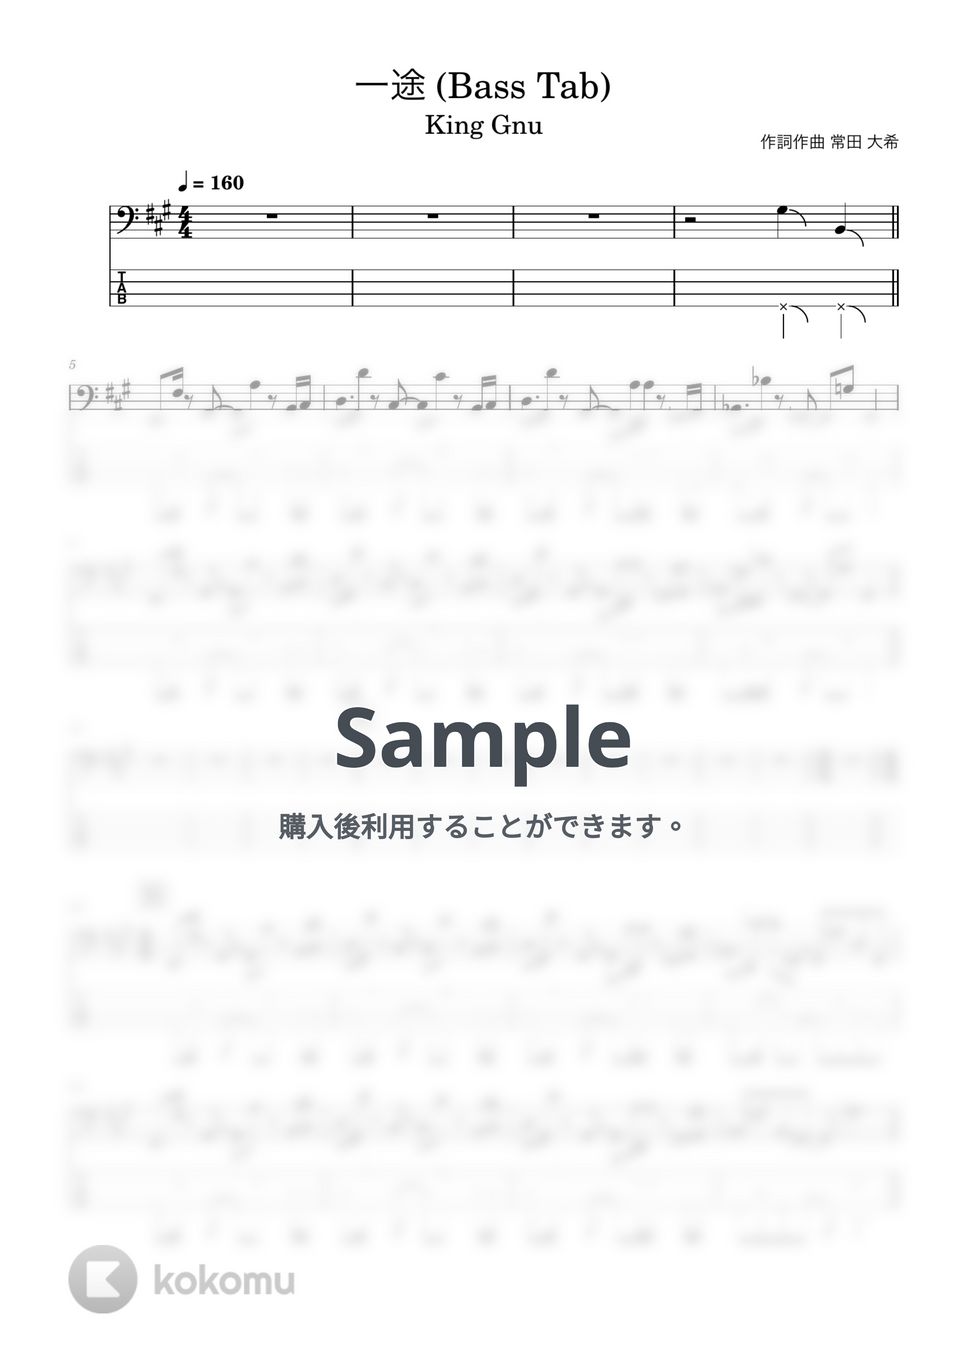 King Gnu - 一途 (『劇場版 呪術廻戦 0』主題歌、ベース譜) by Kodai Hojo